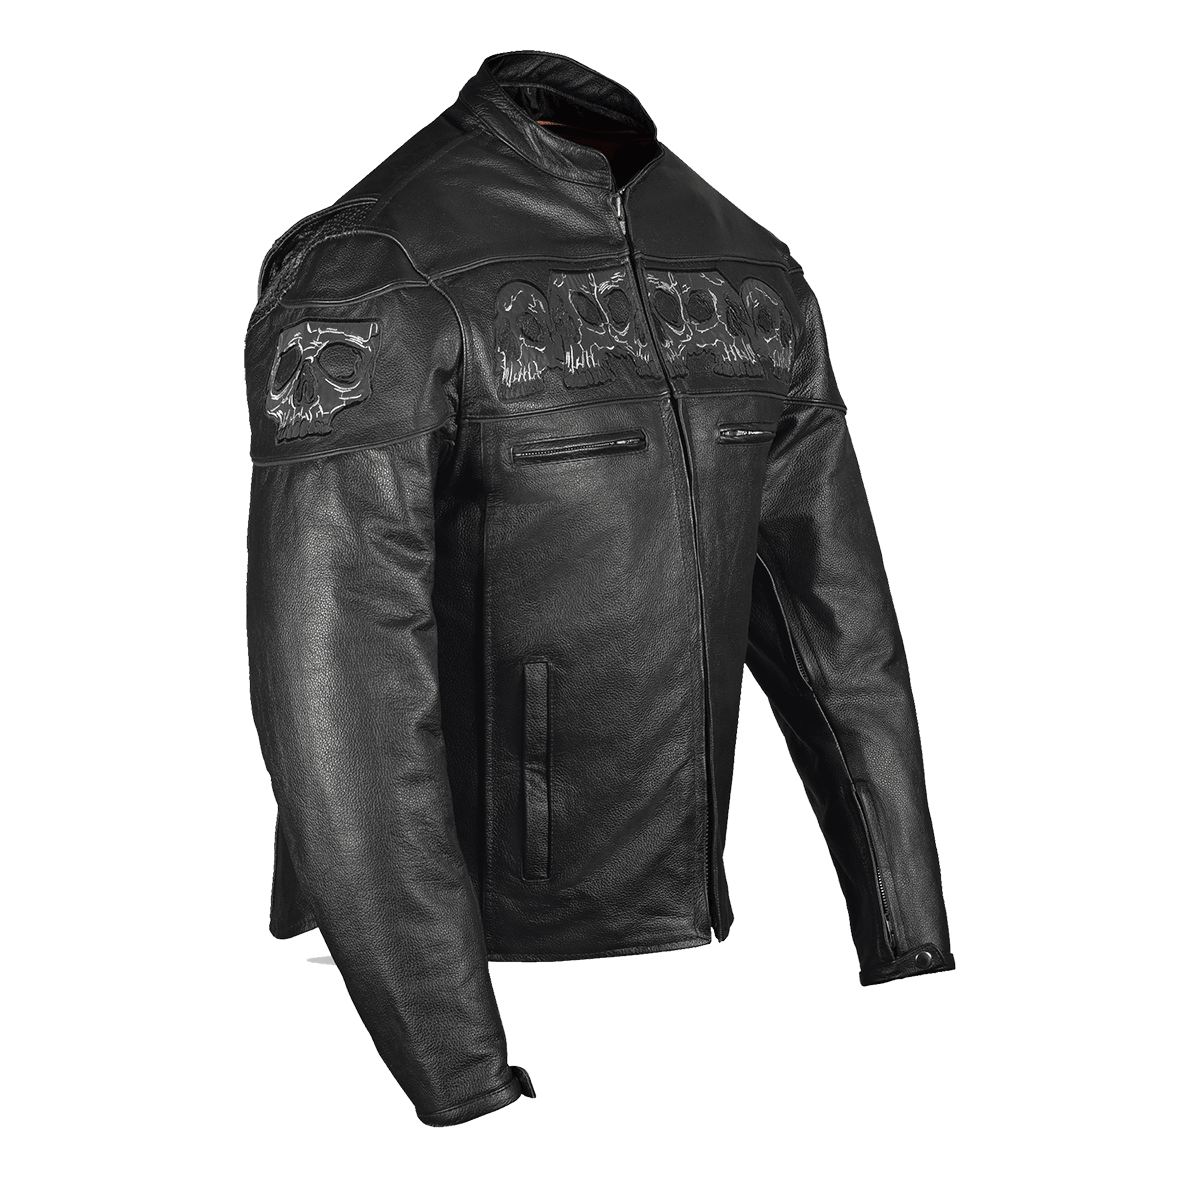 MJ535 Reflective Skull Premium Cowhide Leather Motorcycle Jacket